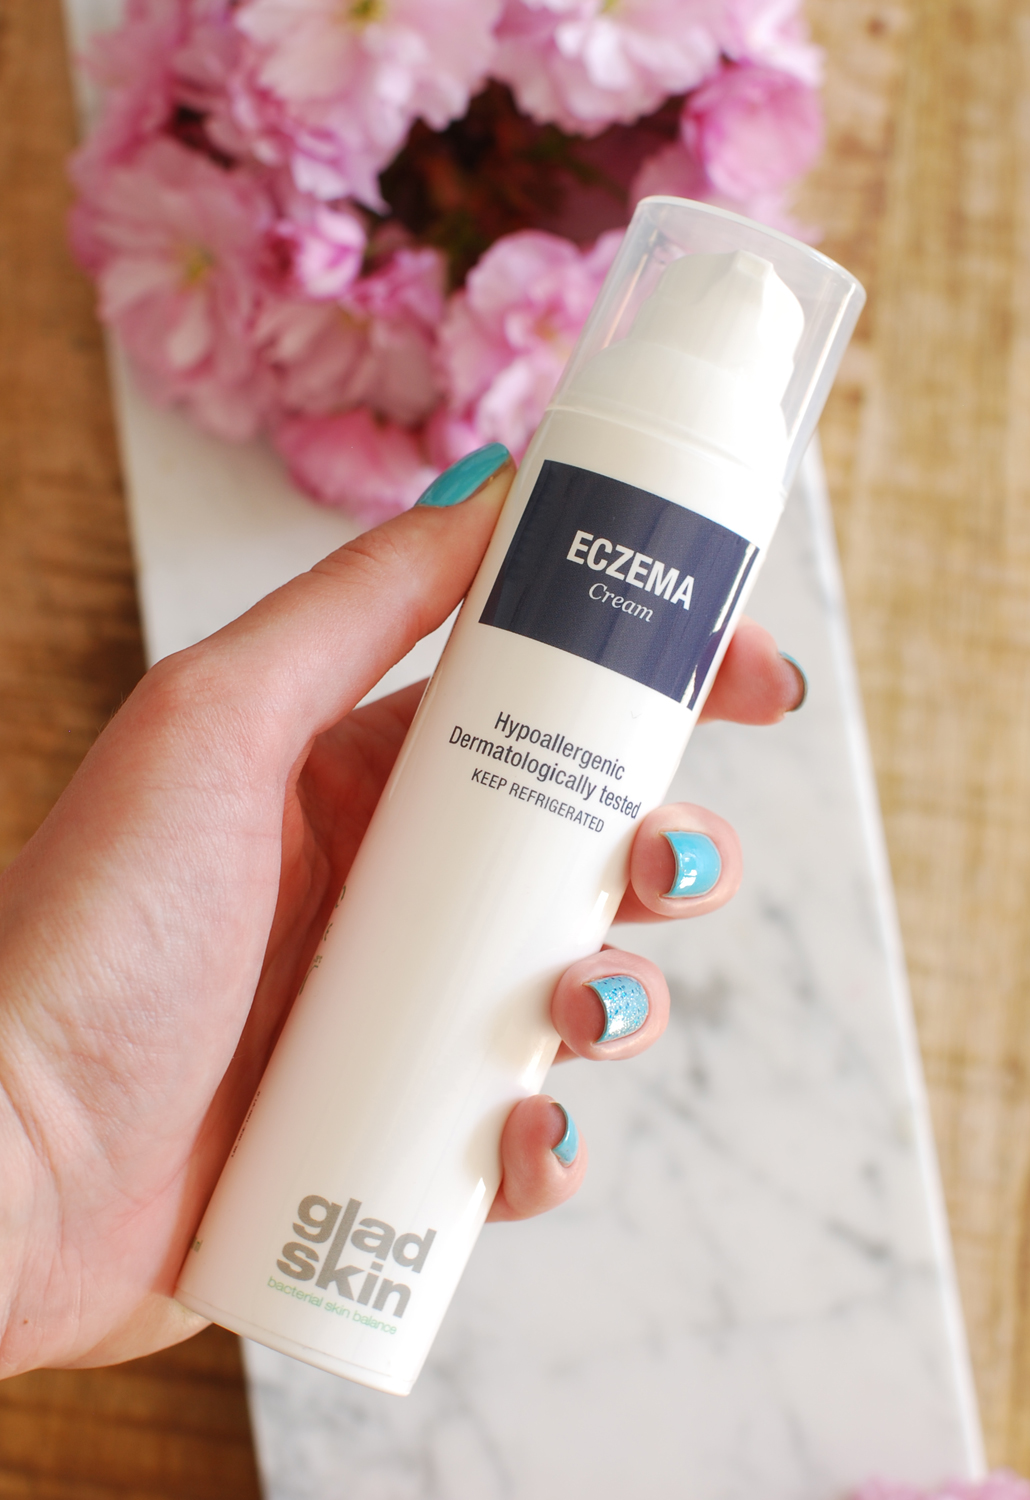 Gladskin eczema cream eczeem creme review lifestyle by linda ervaring